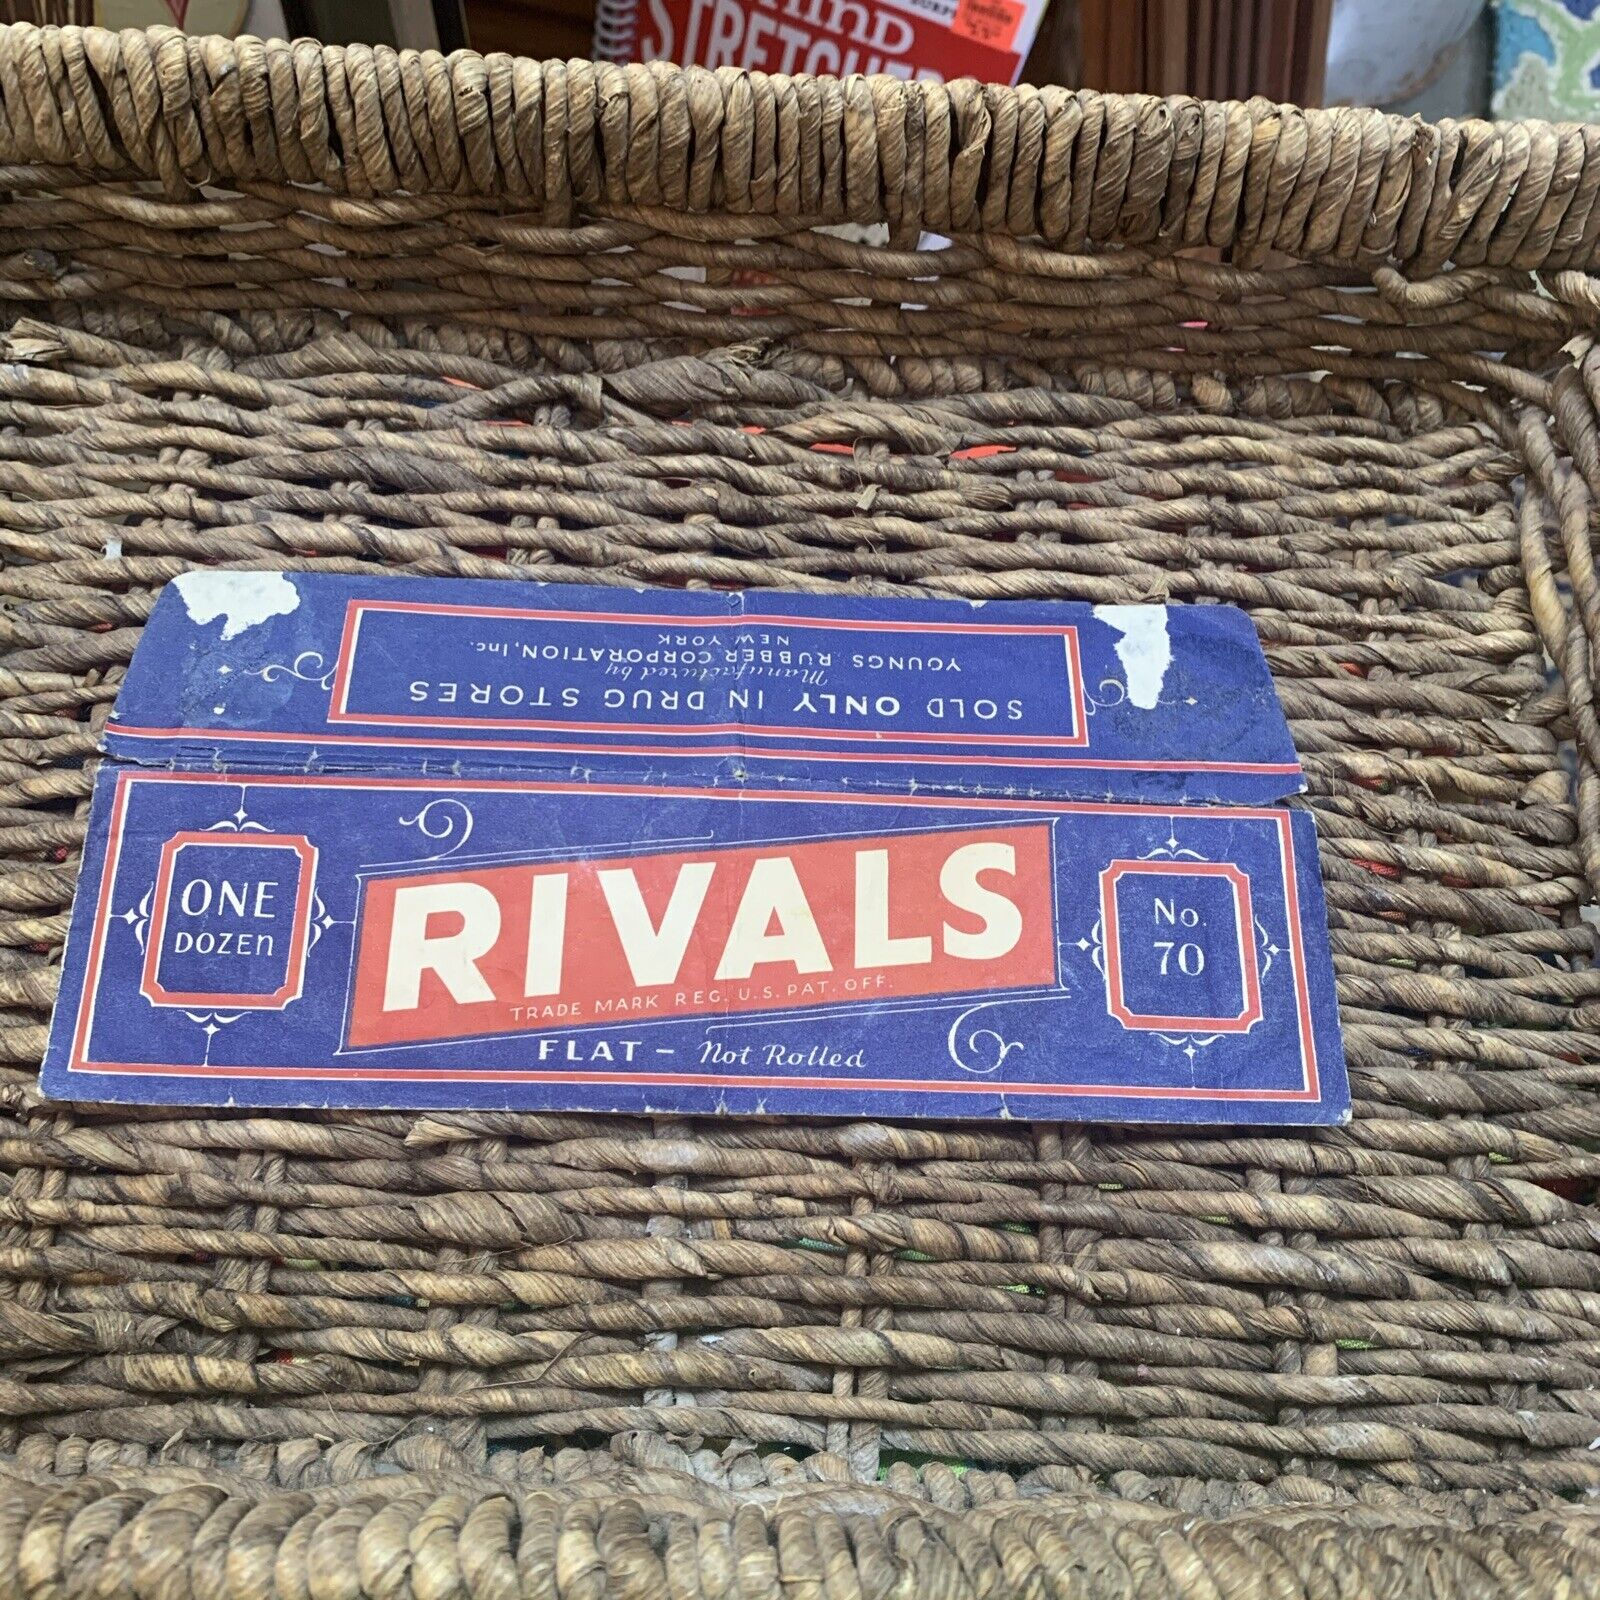 Antique Advertising Envelope “Rivals”